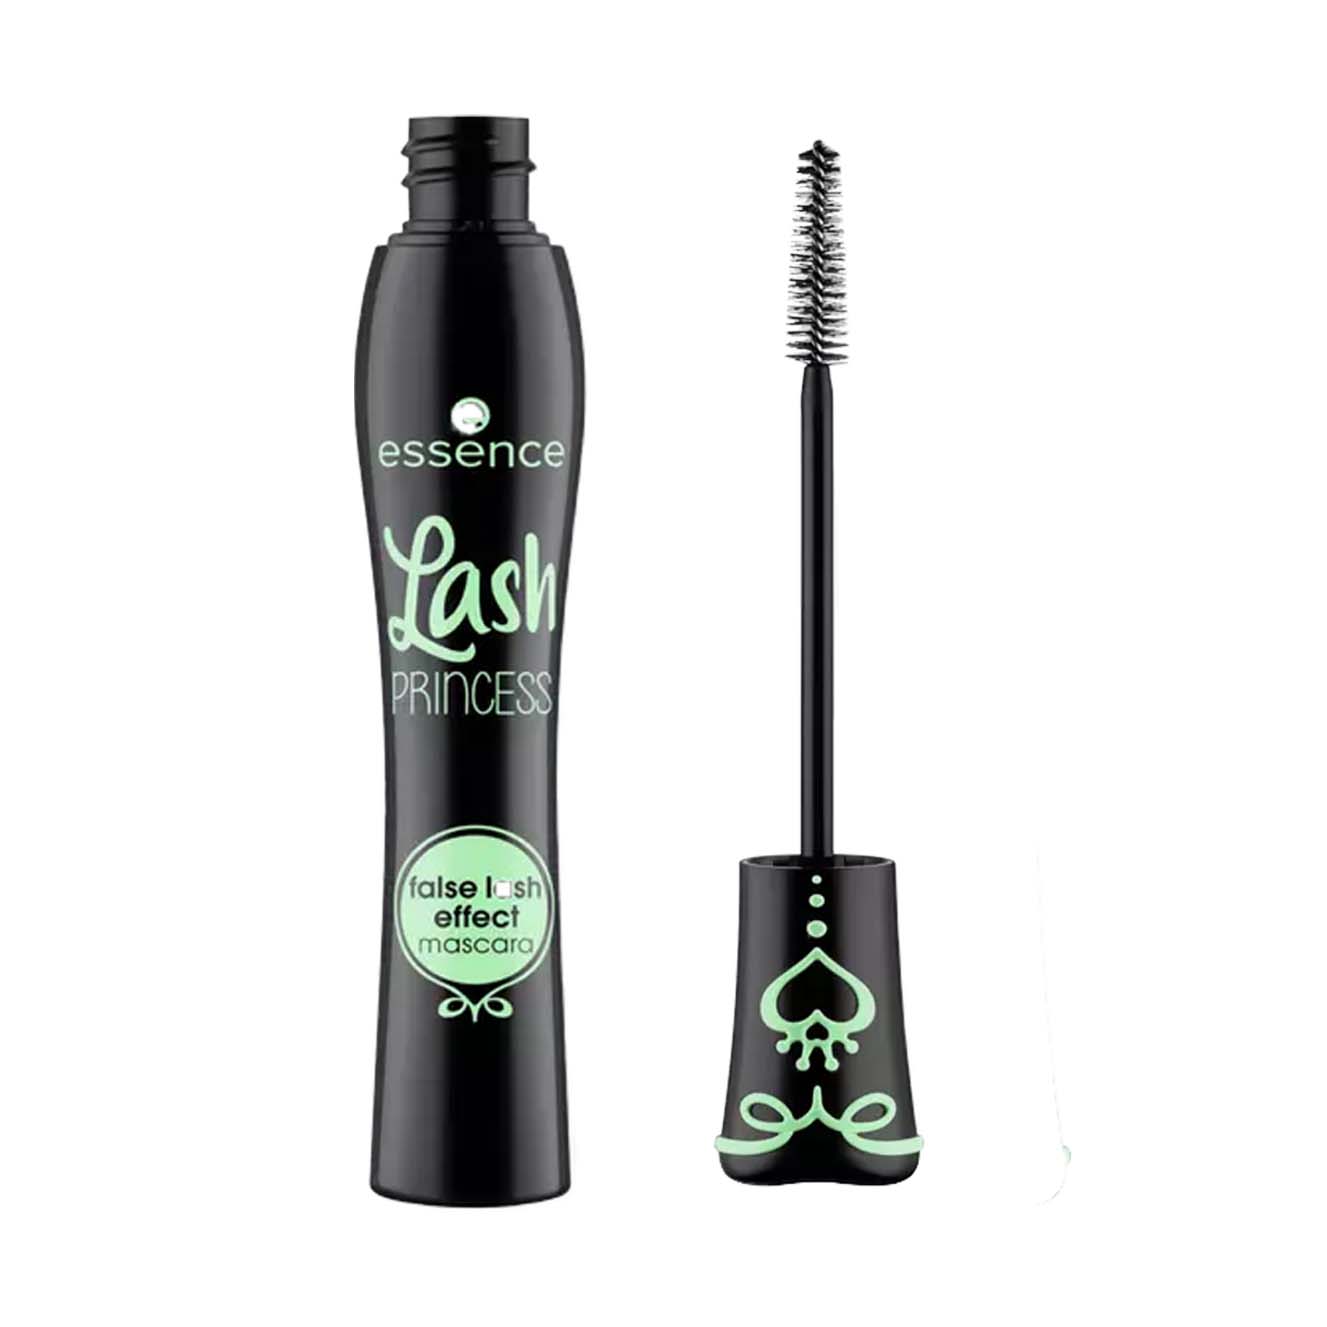 Essence Lash Princess False Lash Effect Waterproof Mascara in black tube with bright green illustrations